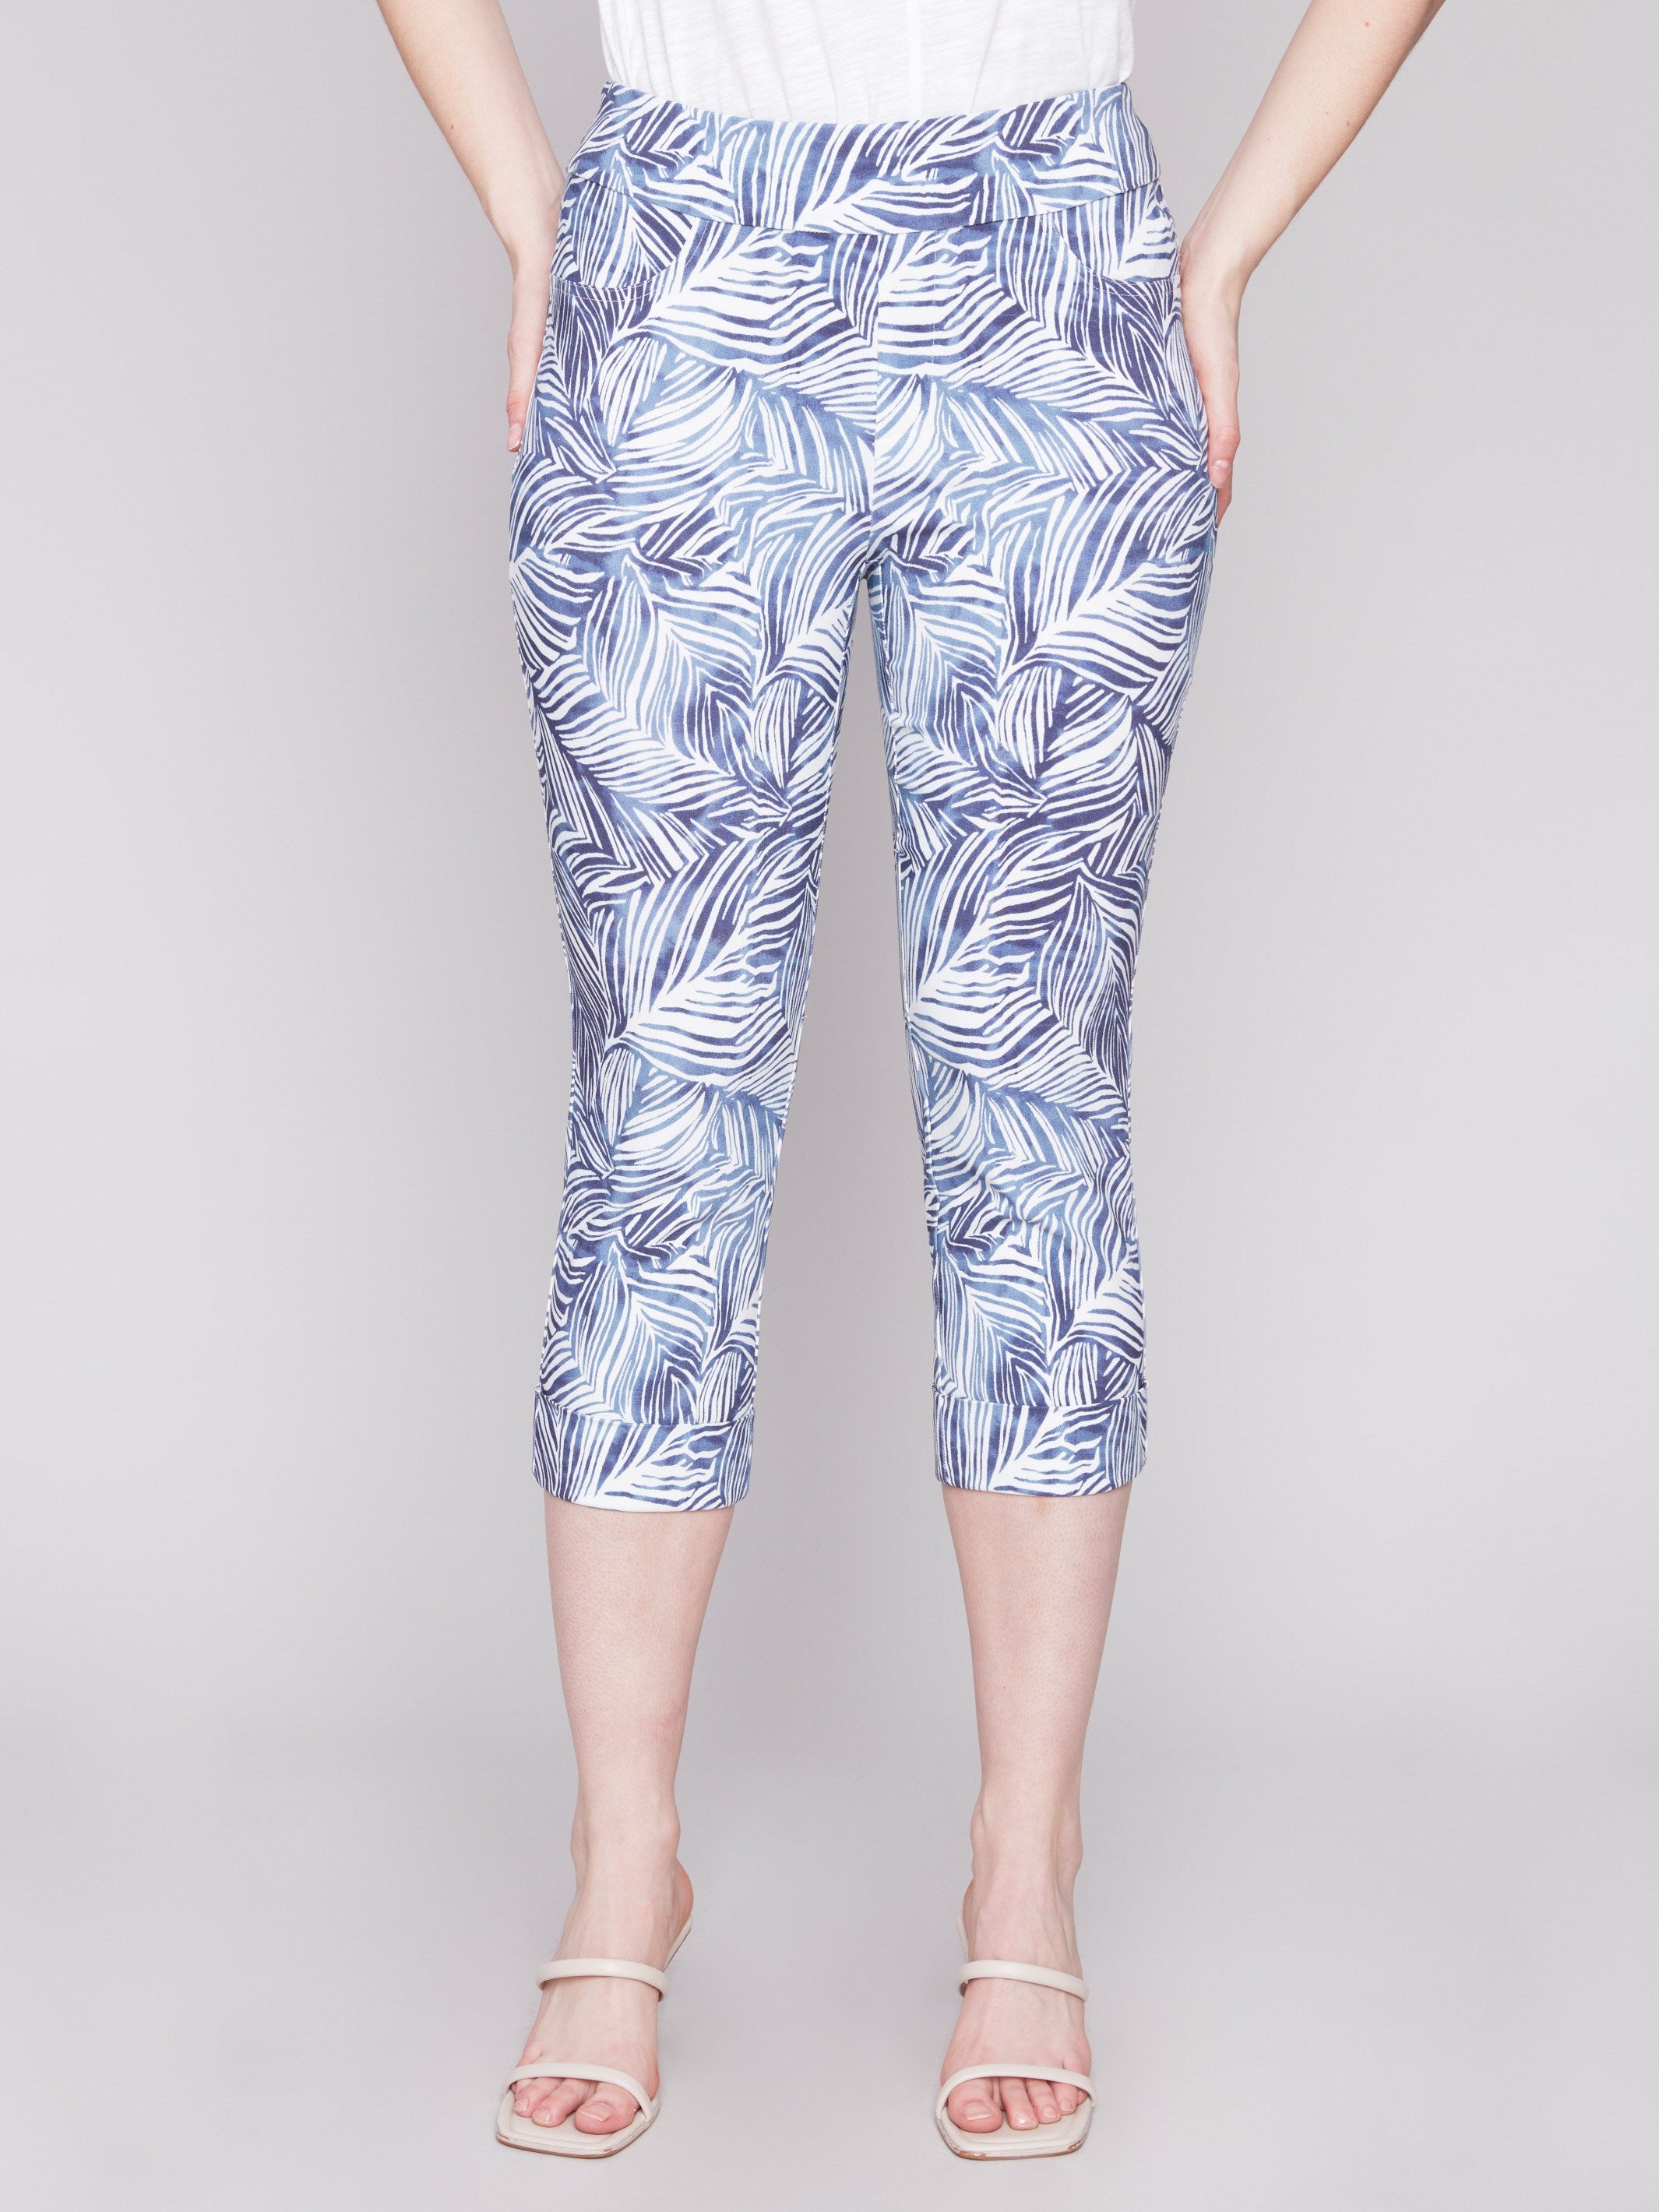 Charlie B Printed Stretch Pull-On Capri Pants - Leaves - Image 3